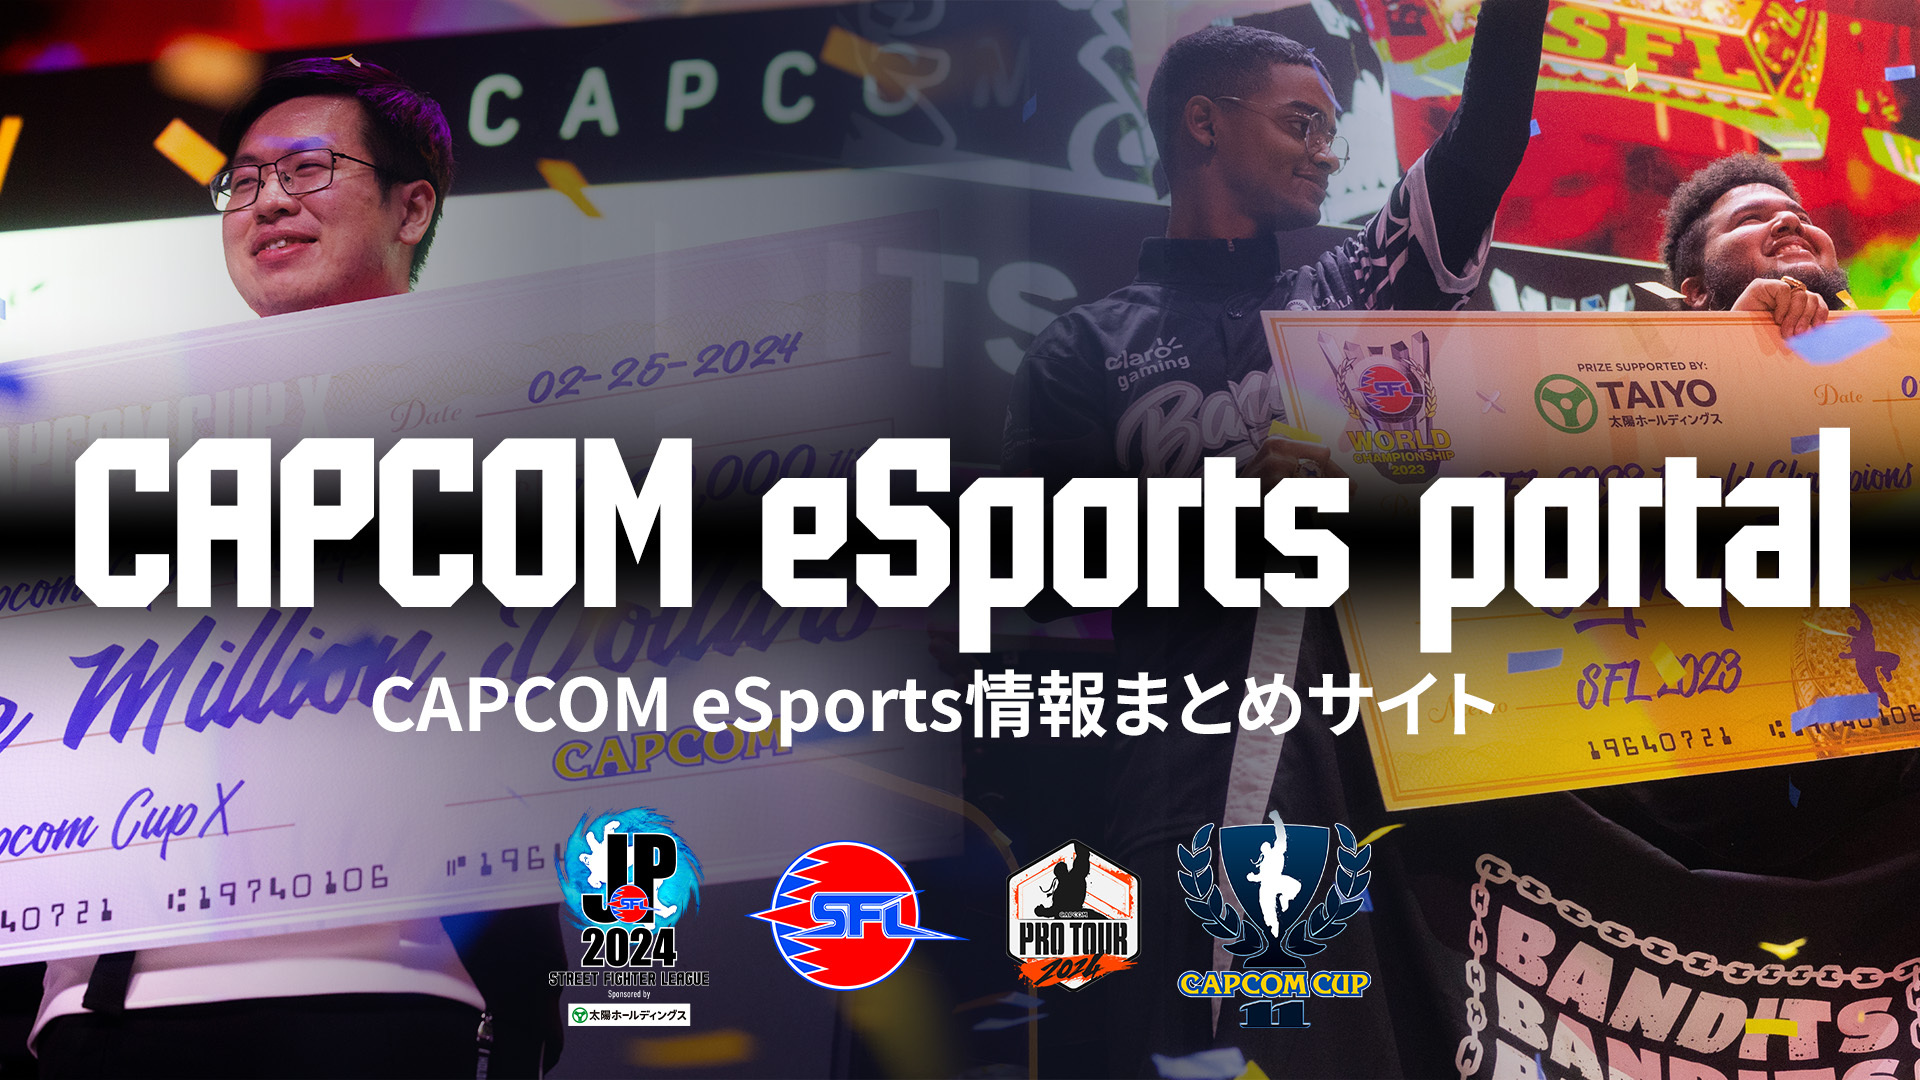 CAPCOM eSports portalオープン！CAPCOM eSportsの情報はこちらをチェック！